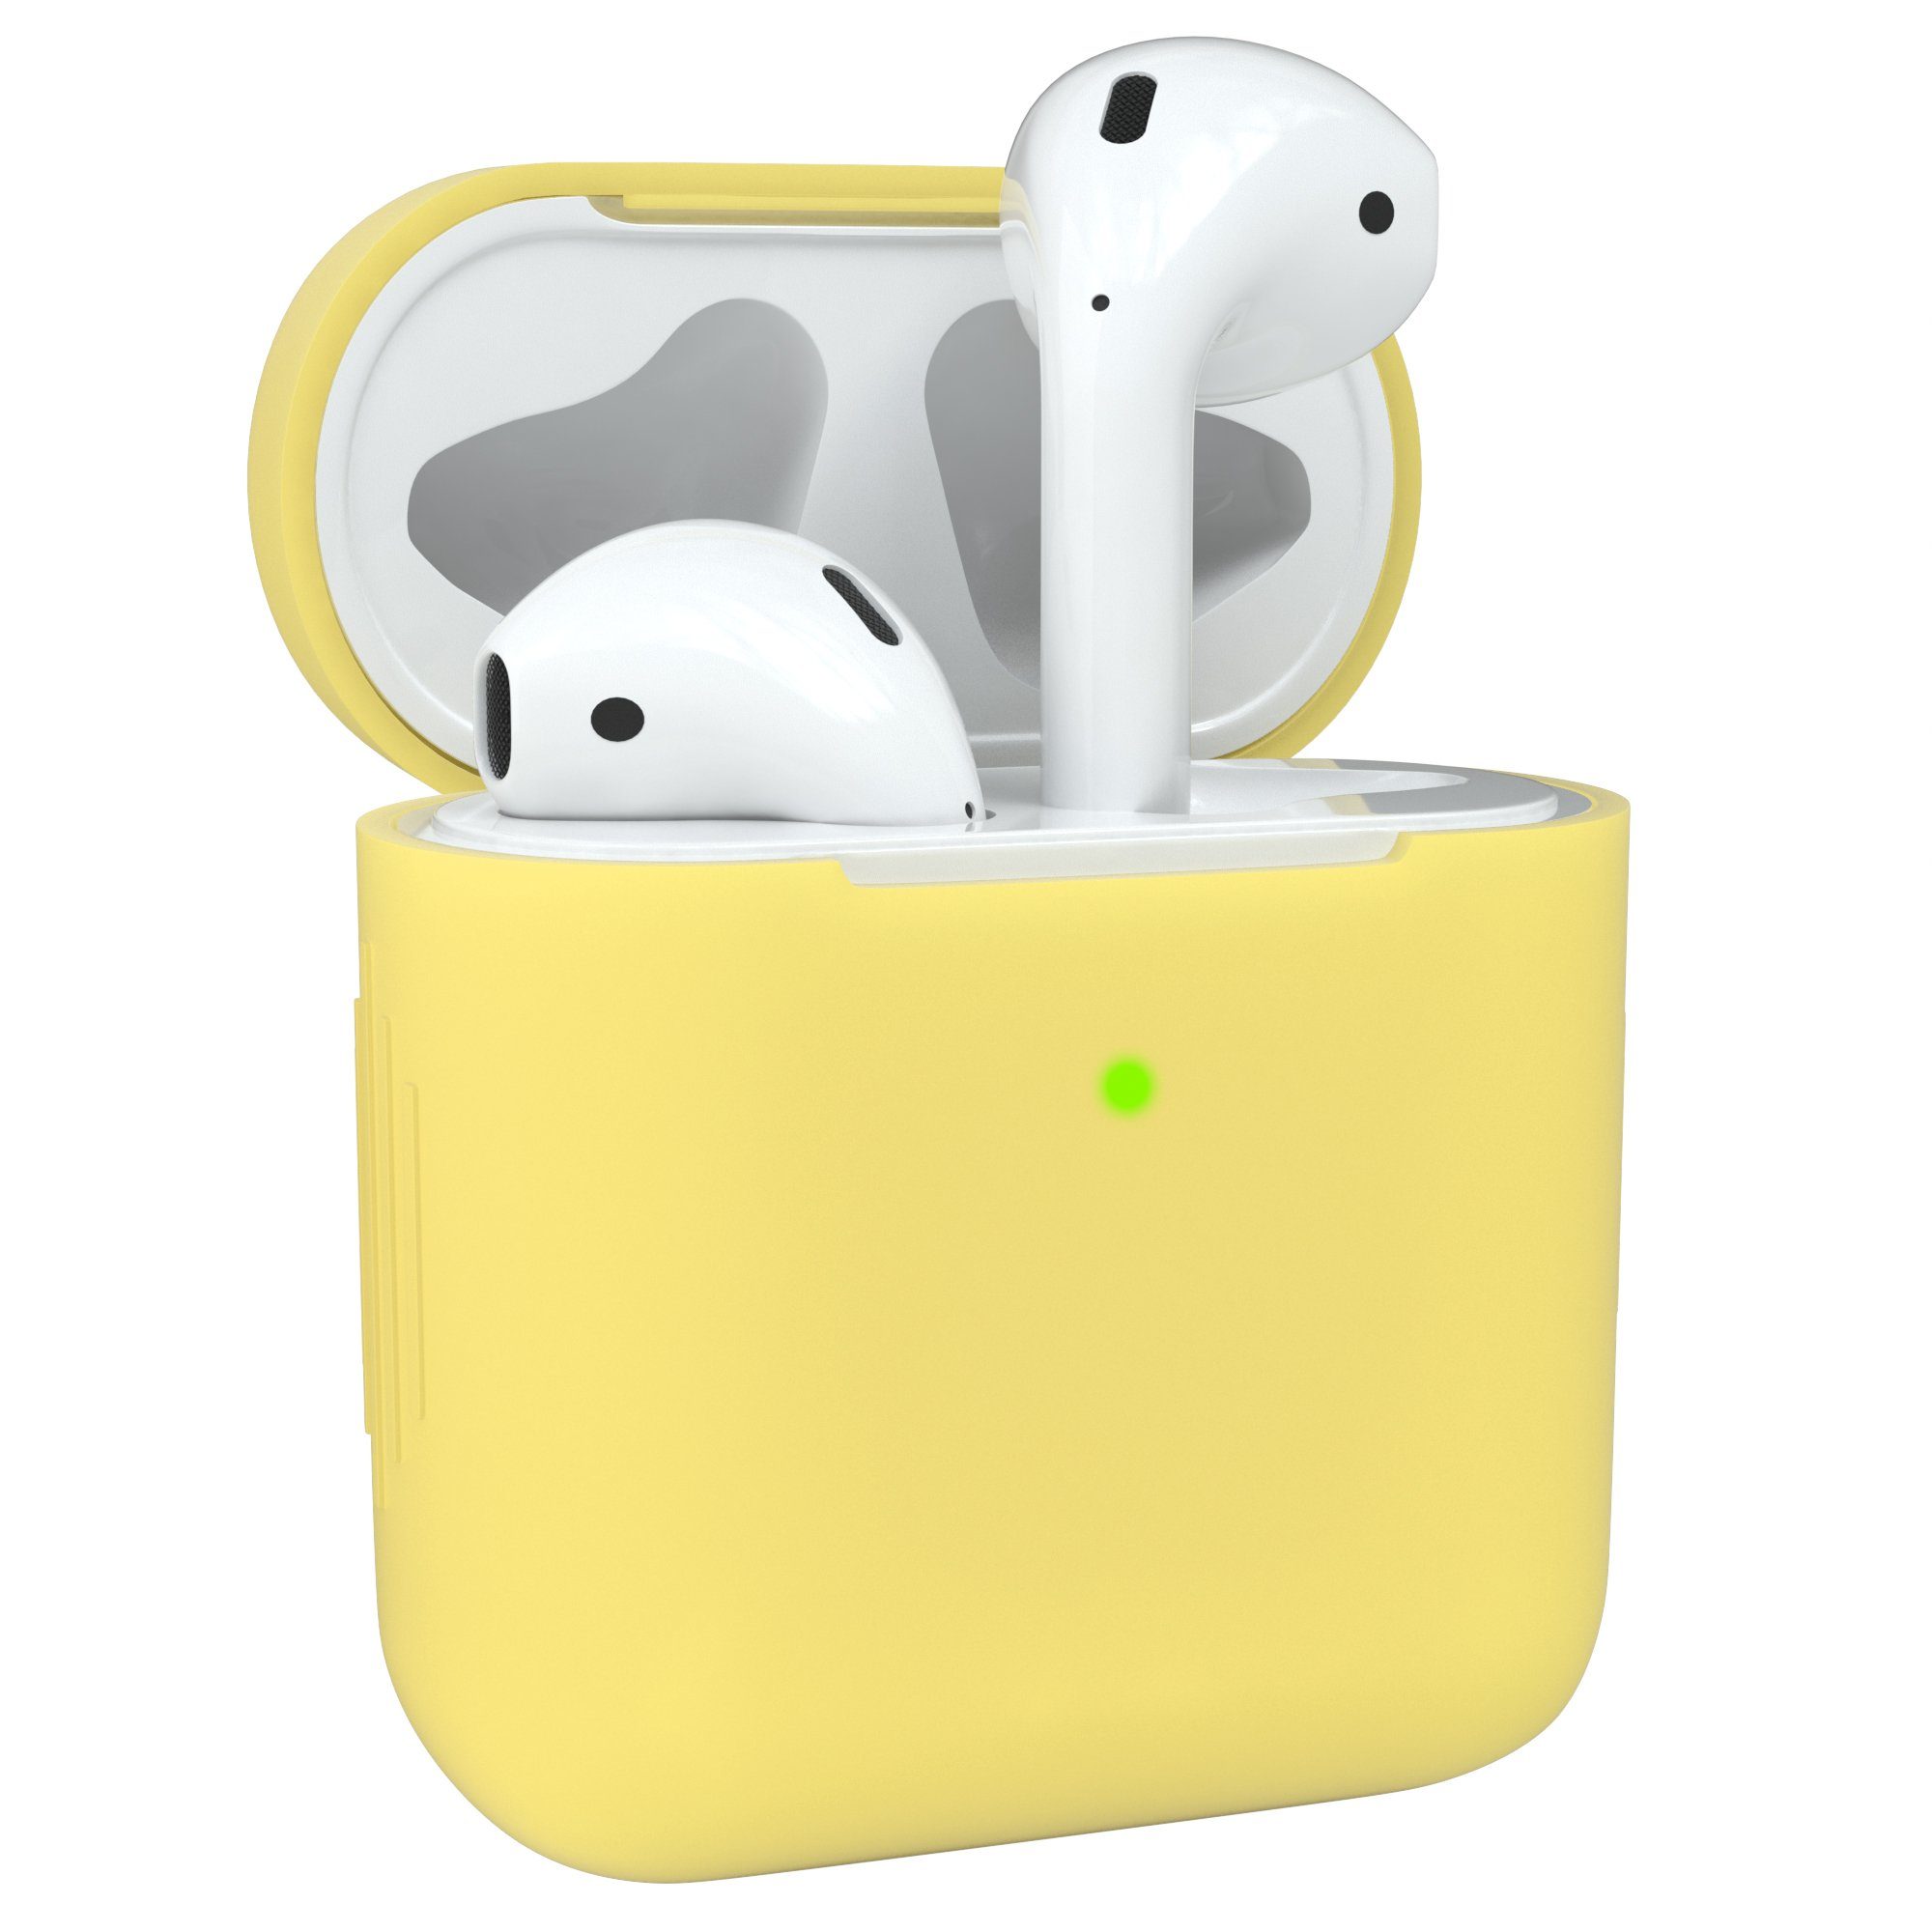 EAZY CASE Kopfhörer-Schutzhülle Silikon Hülle kompatibel mit Apple AirPods 1 & 2, Fullcover Silikoncase Rutschfestes Etui Hülle Stoßfest Cover Gelb